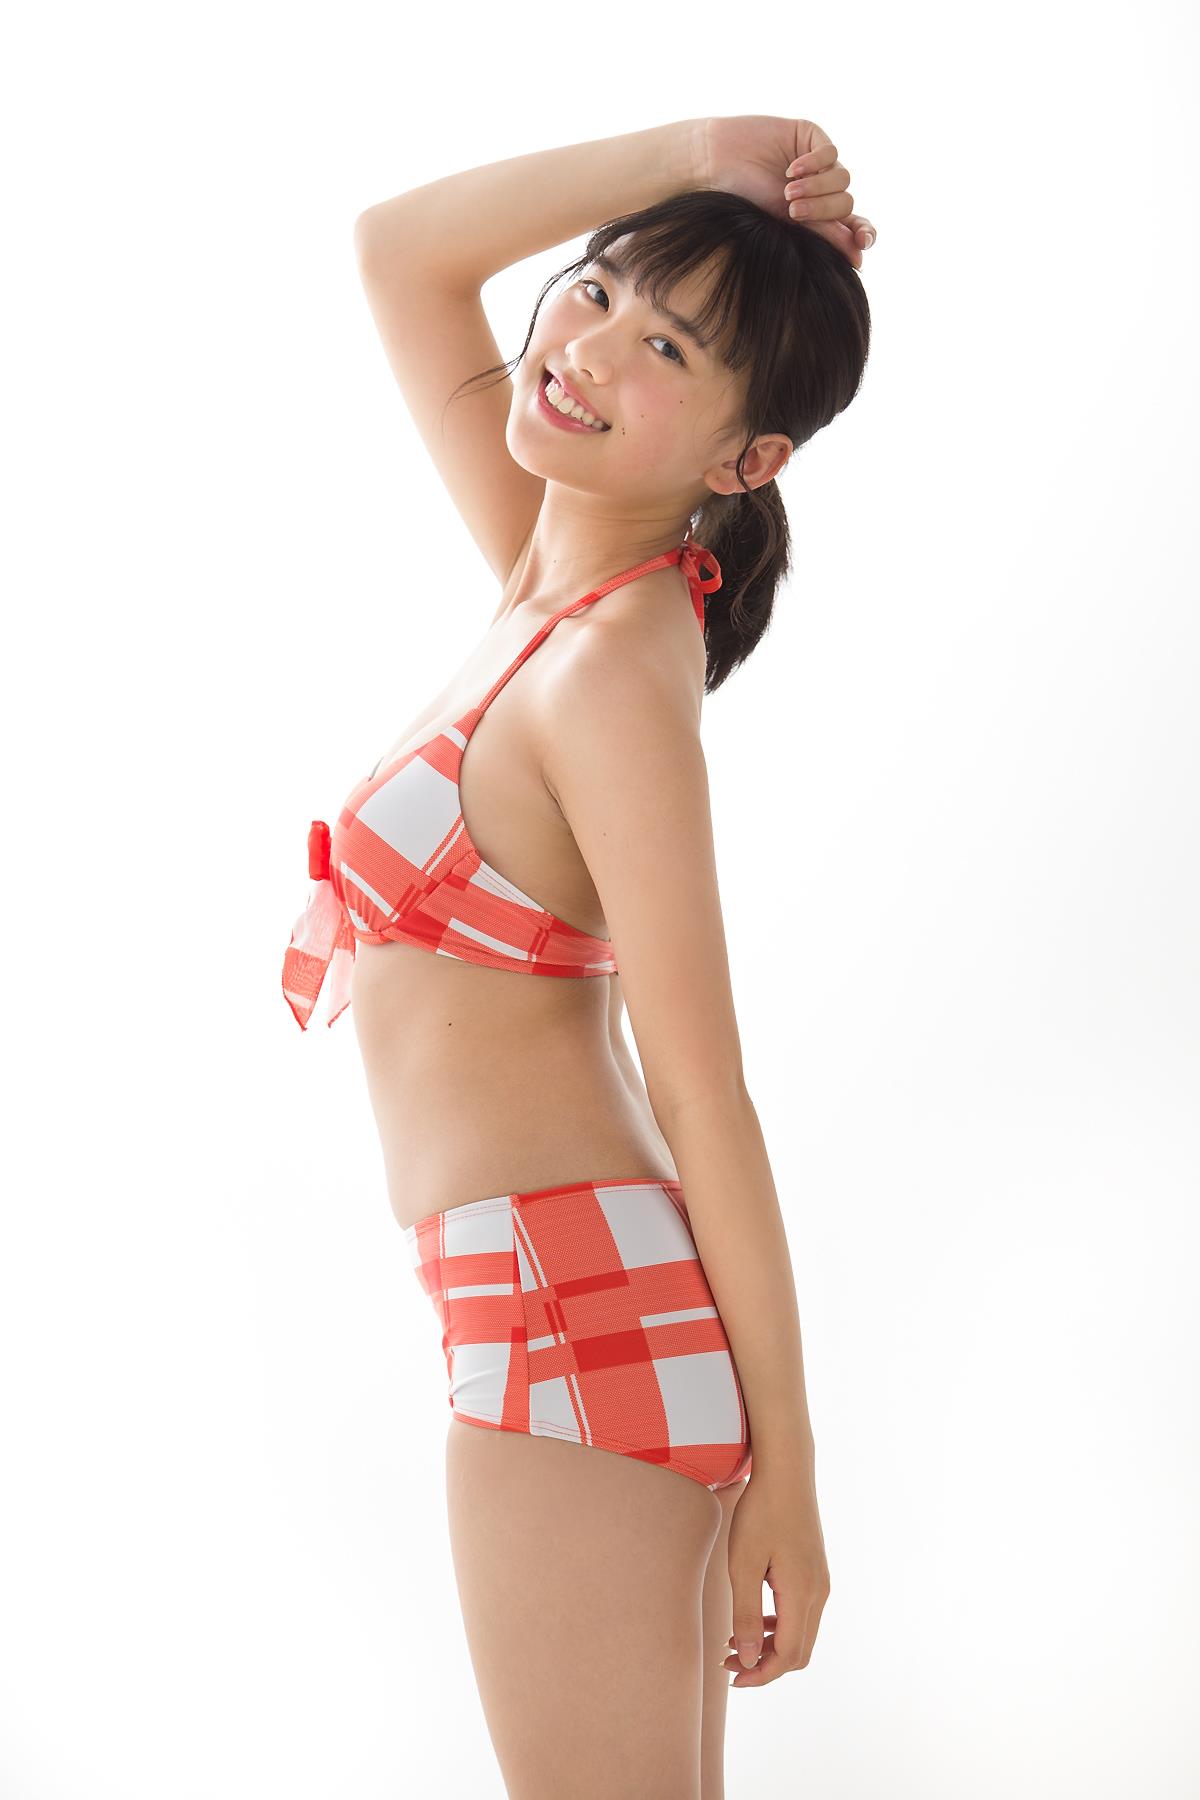 Minisuka.tv Sarina Kashiwagi 柏木さりな Premium Gallery 2.7 - 15.jpg